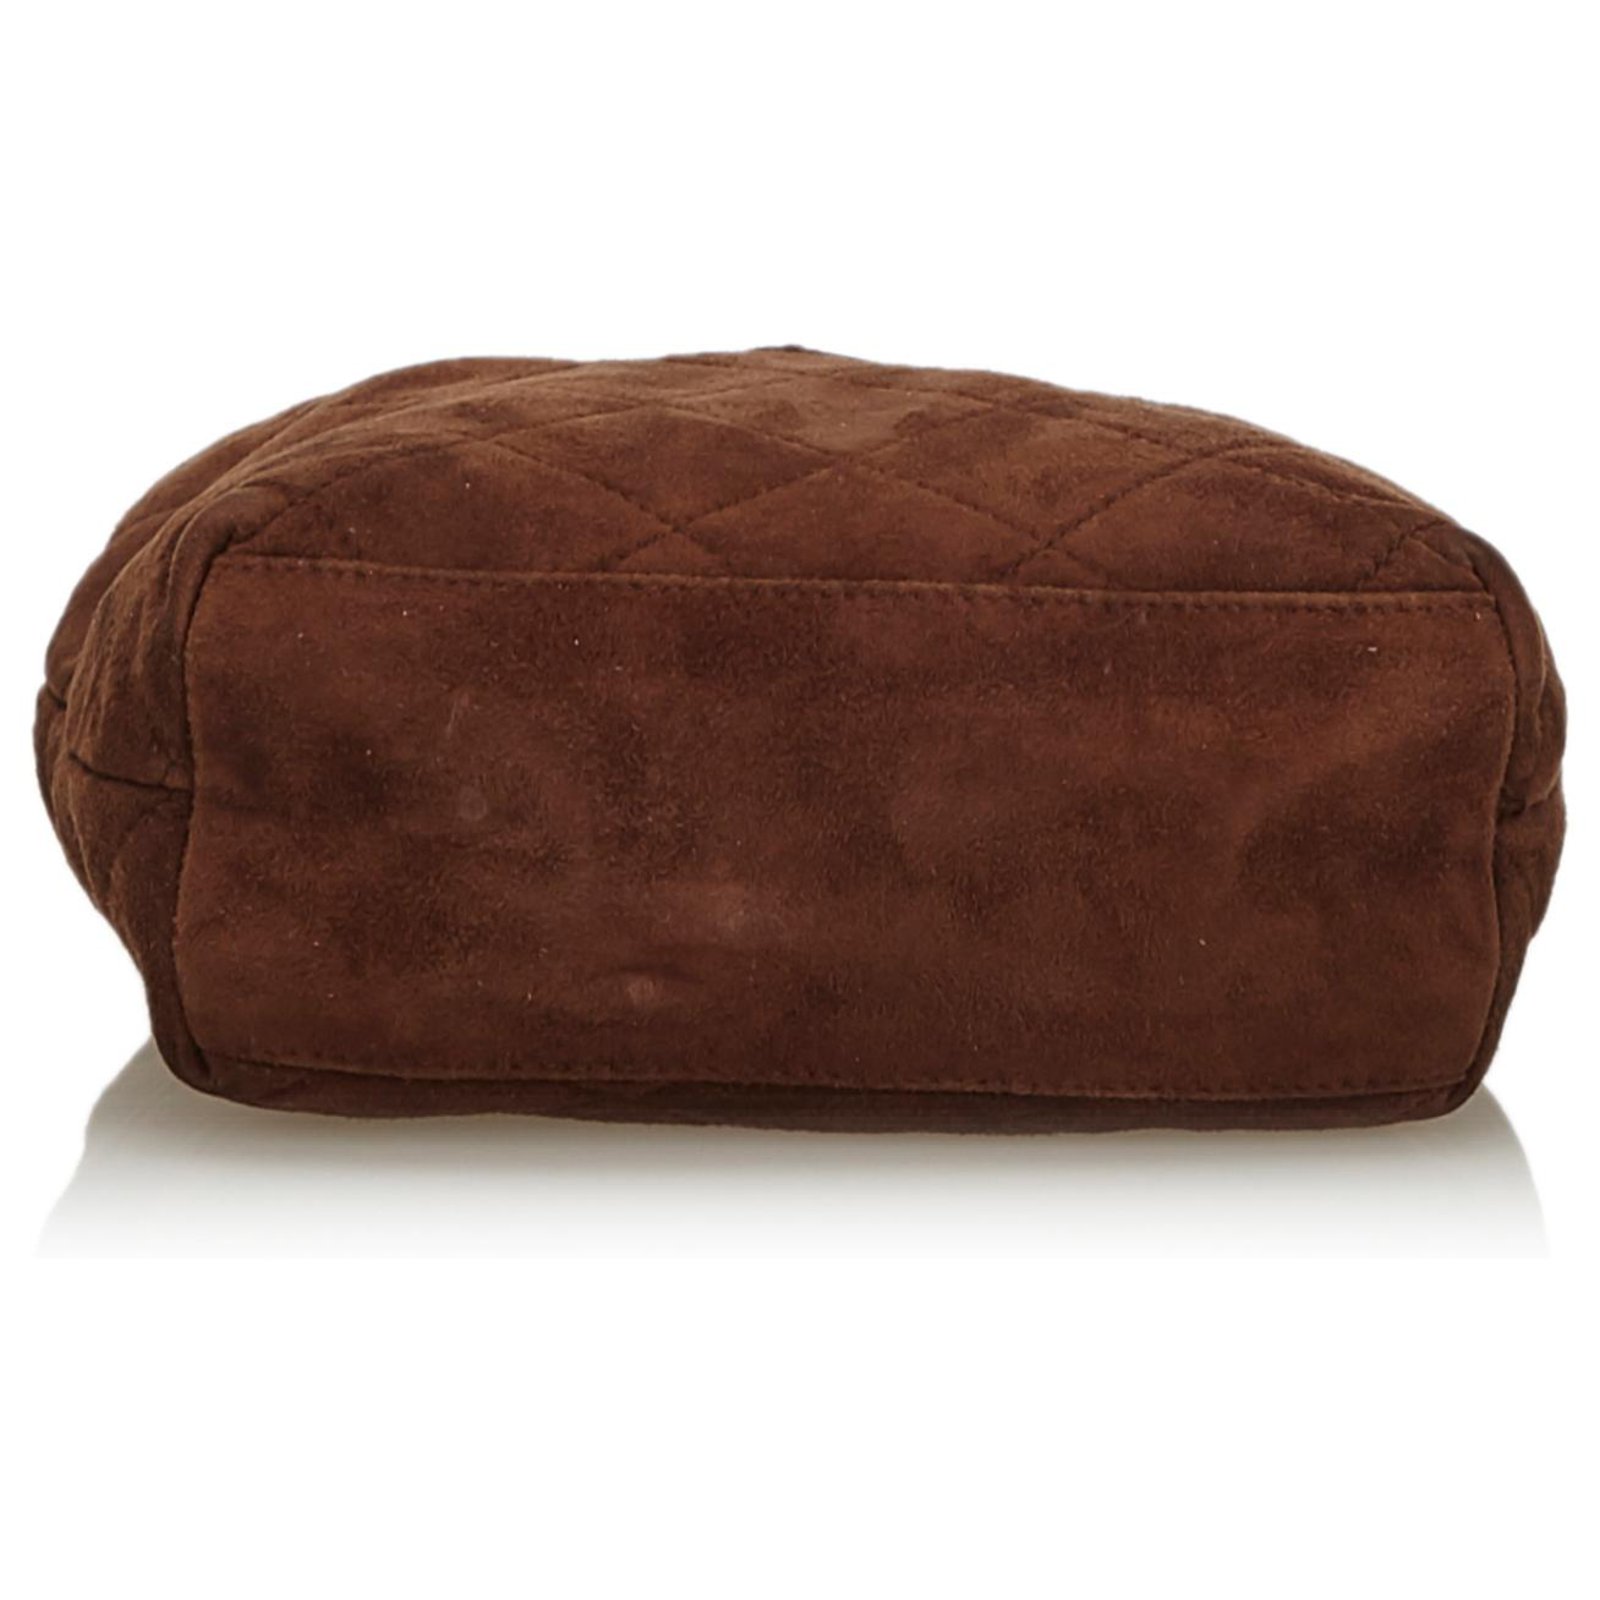 Auth PRADA Handbag Chain Shoulder Bag #2503 Dark Brown Leather